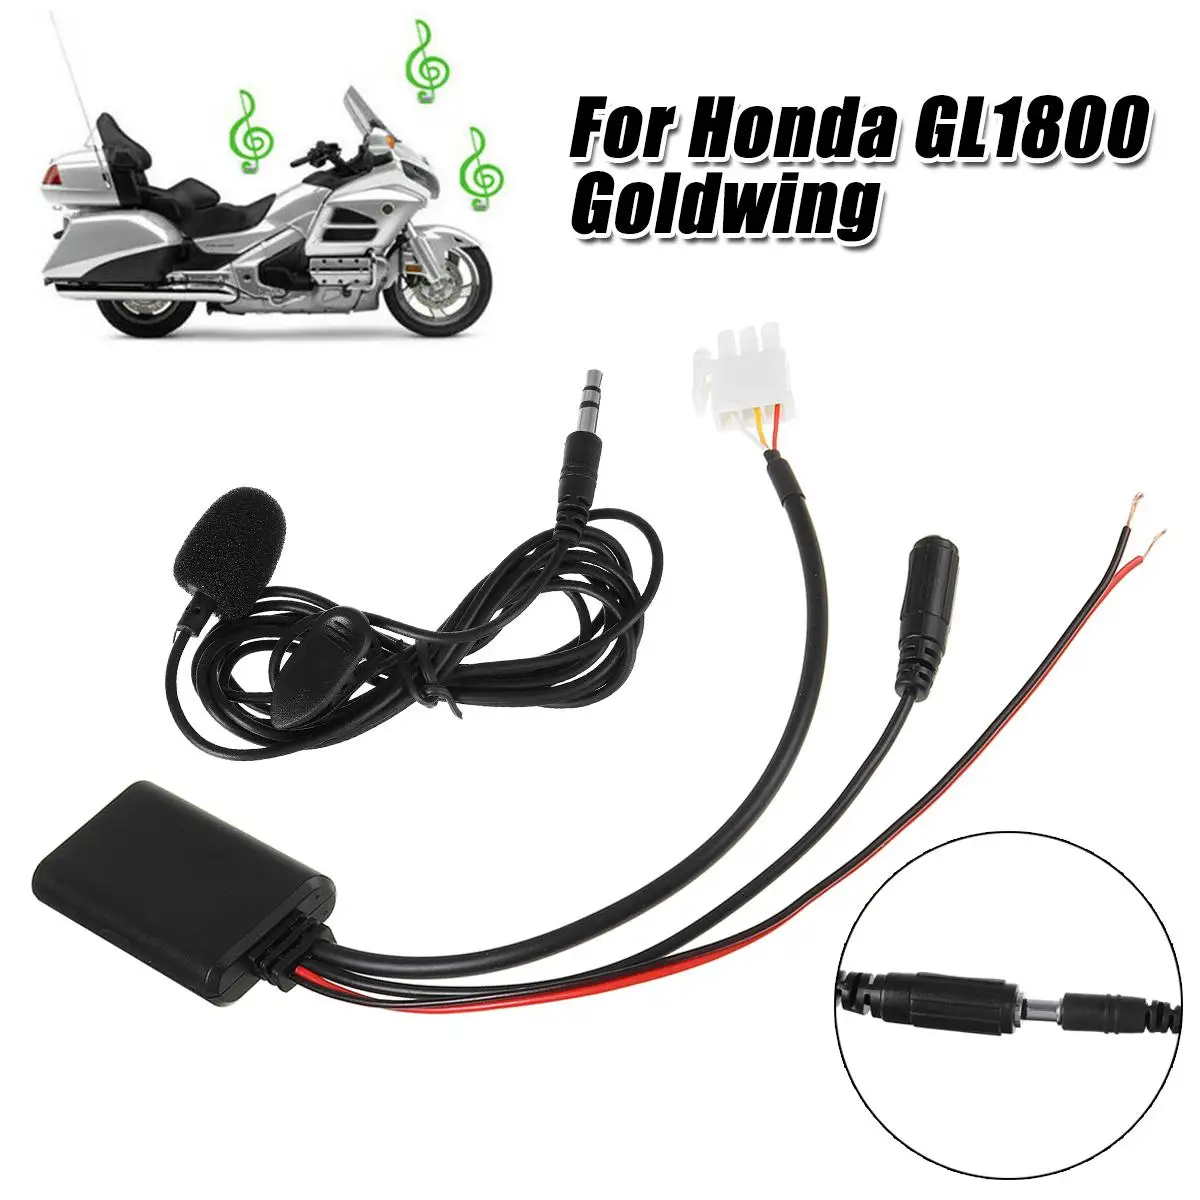 Pentru Honda GL1800 Goldwing Motocicleta 3Pin AUX Audio Cablu Adaptor cu Microfon, Receptor Audio